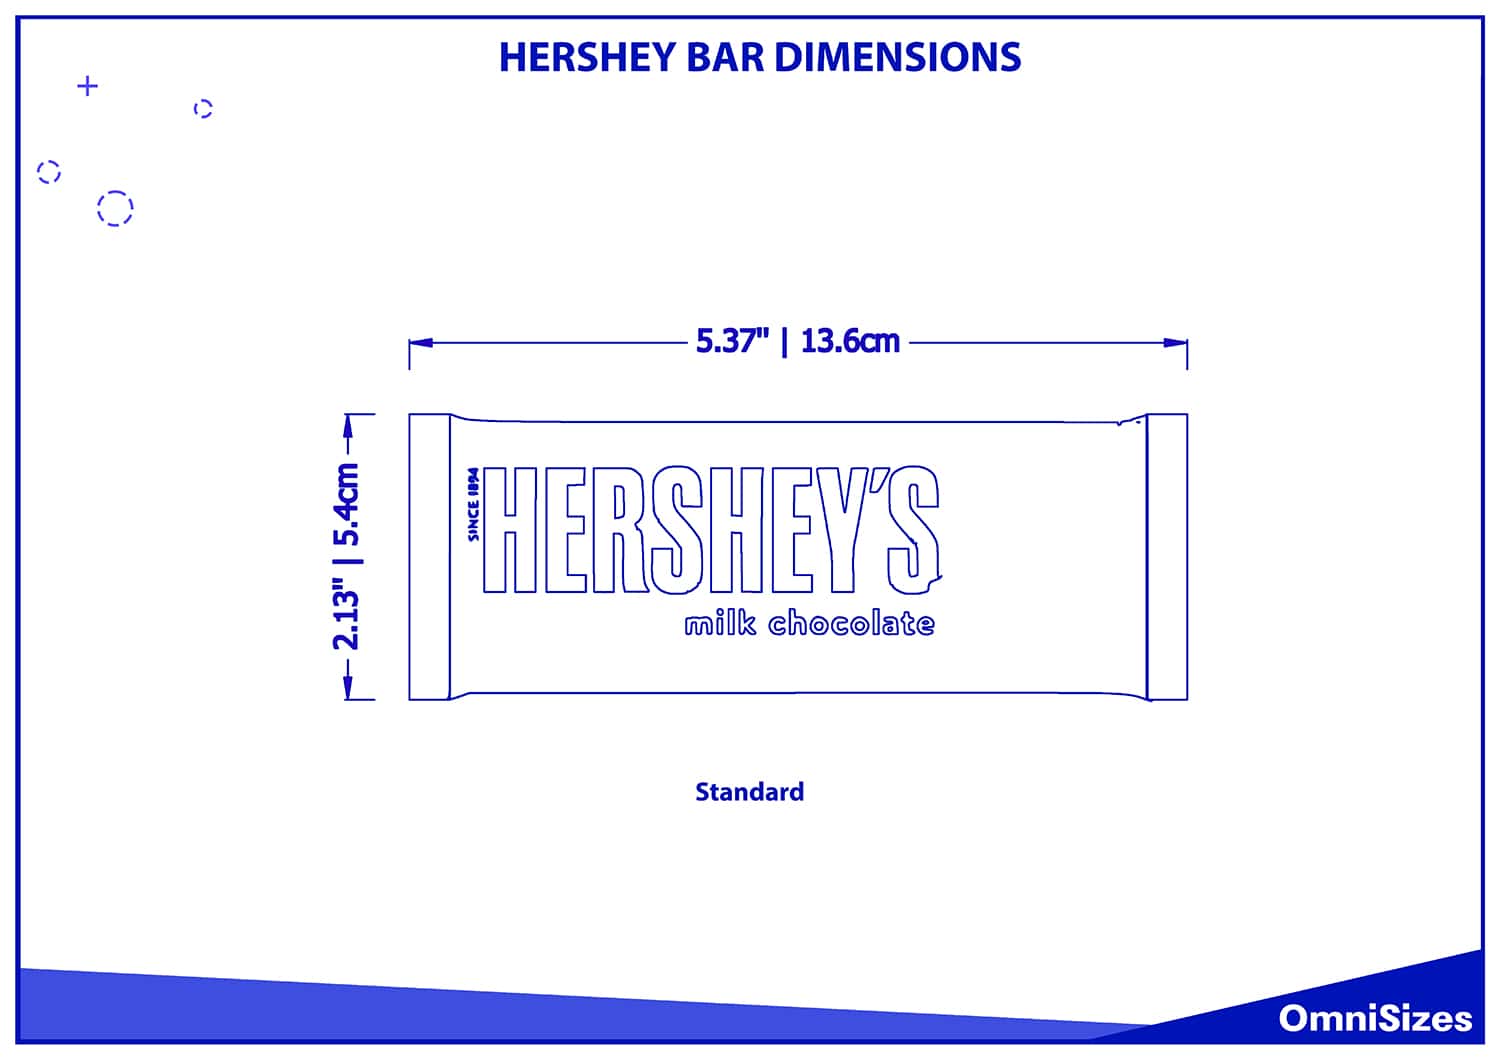 Hershey bar dimensions